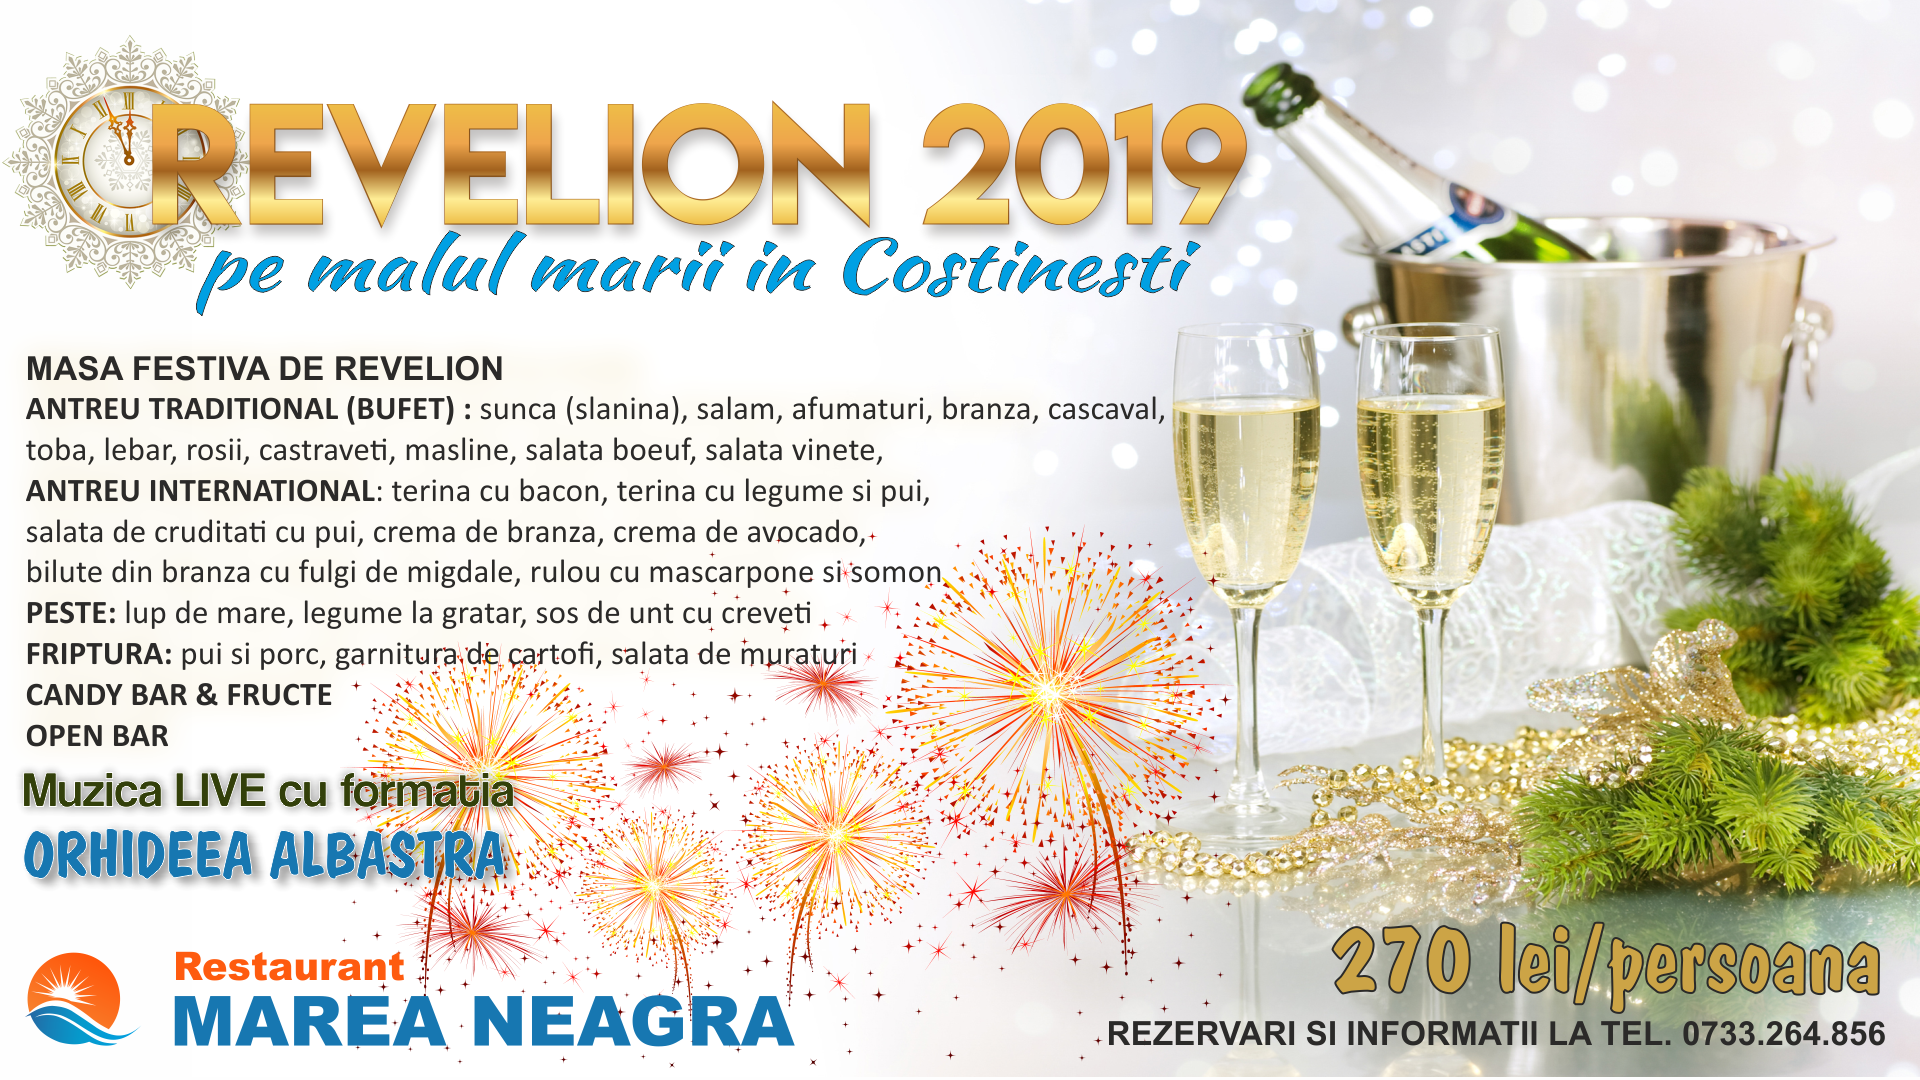 Rrevelion 2019 Restaurant Marea Neagra